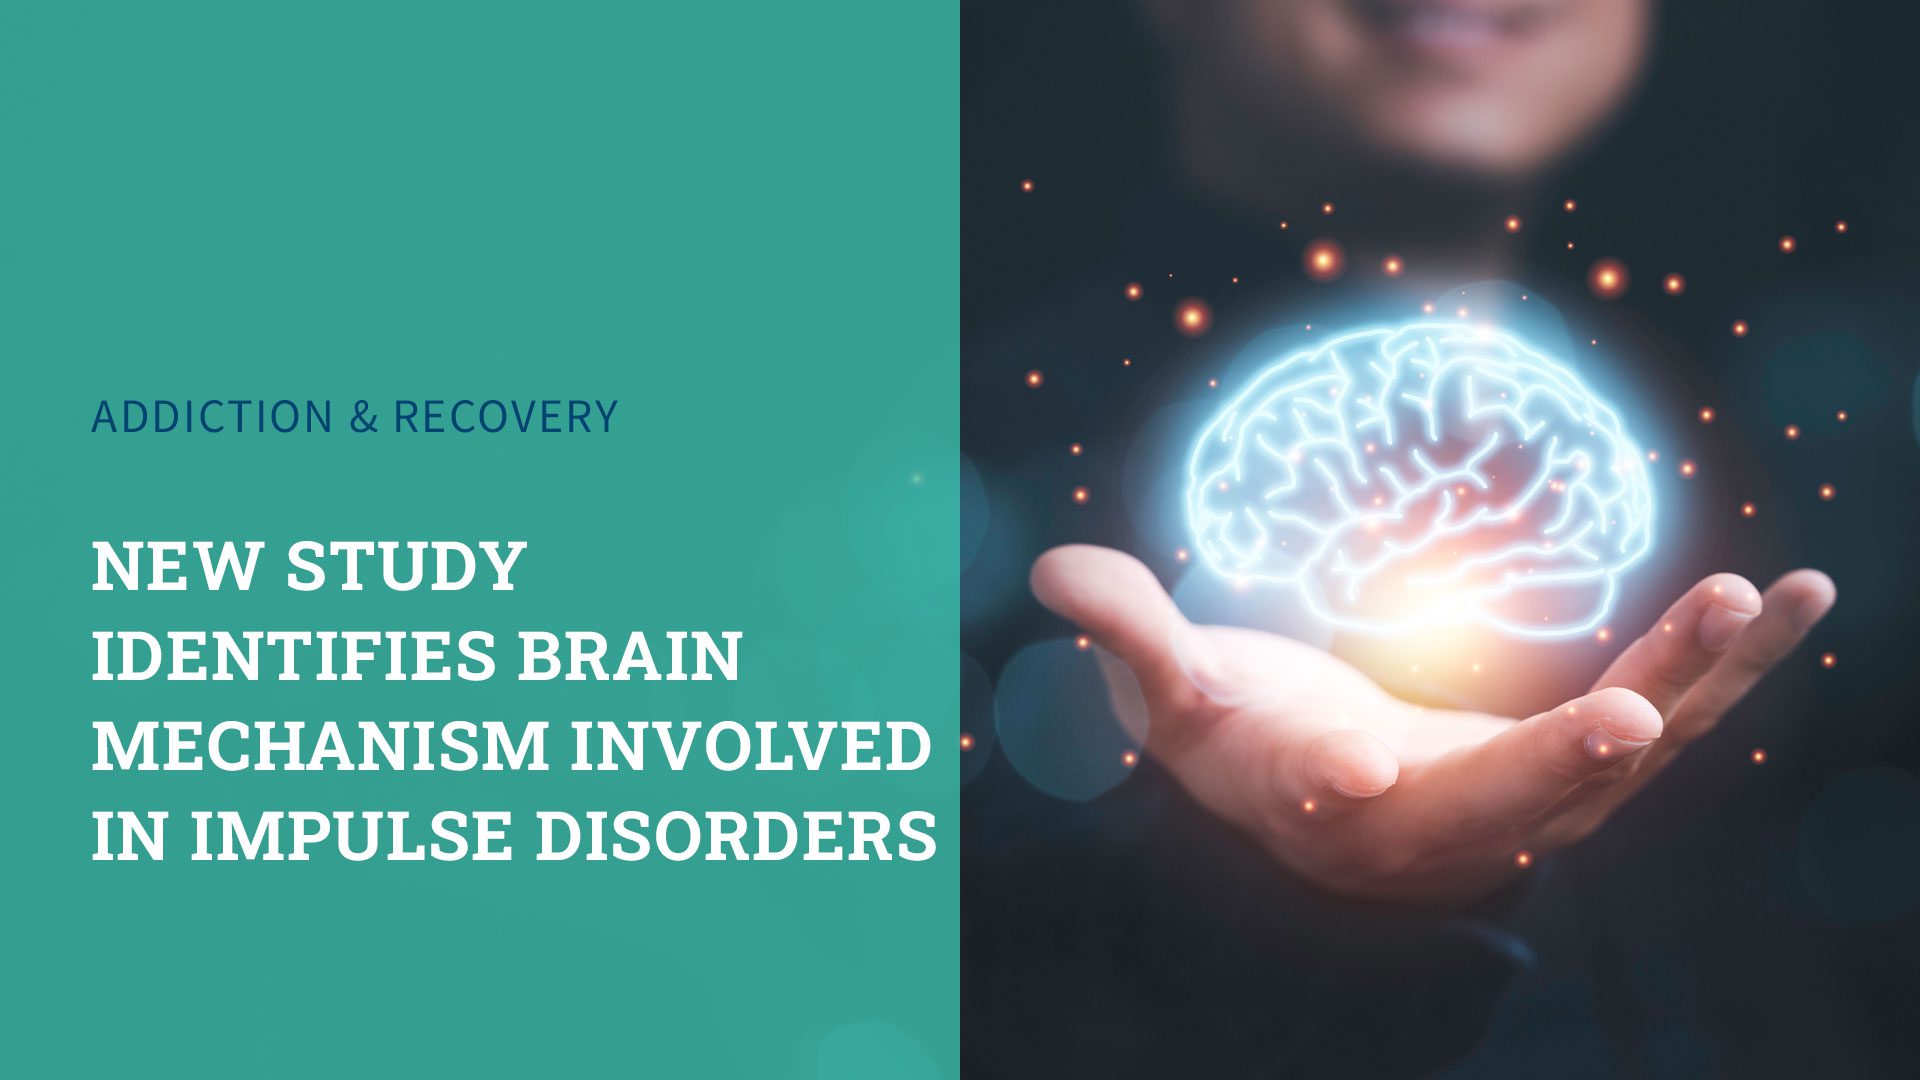 New Study Identifies Brain Mechanism Involved in Impulse Disorders